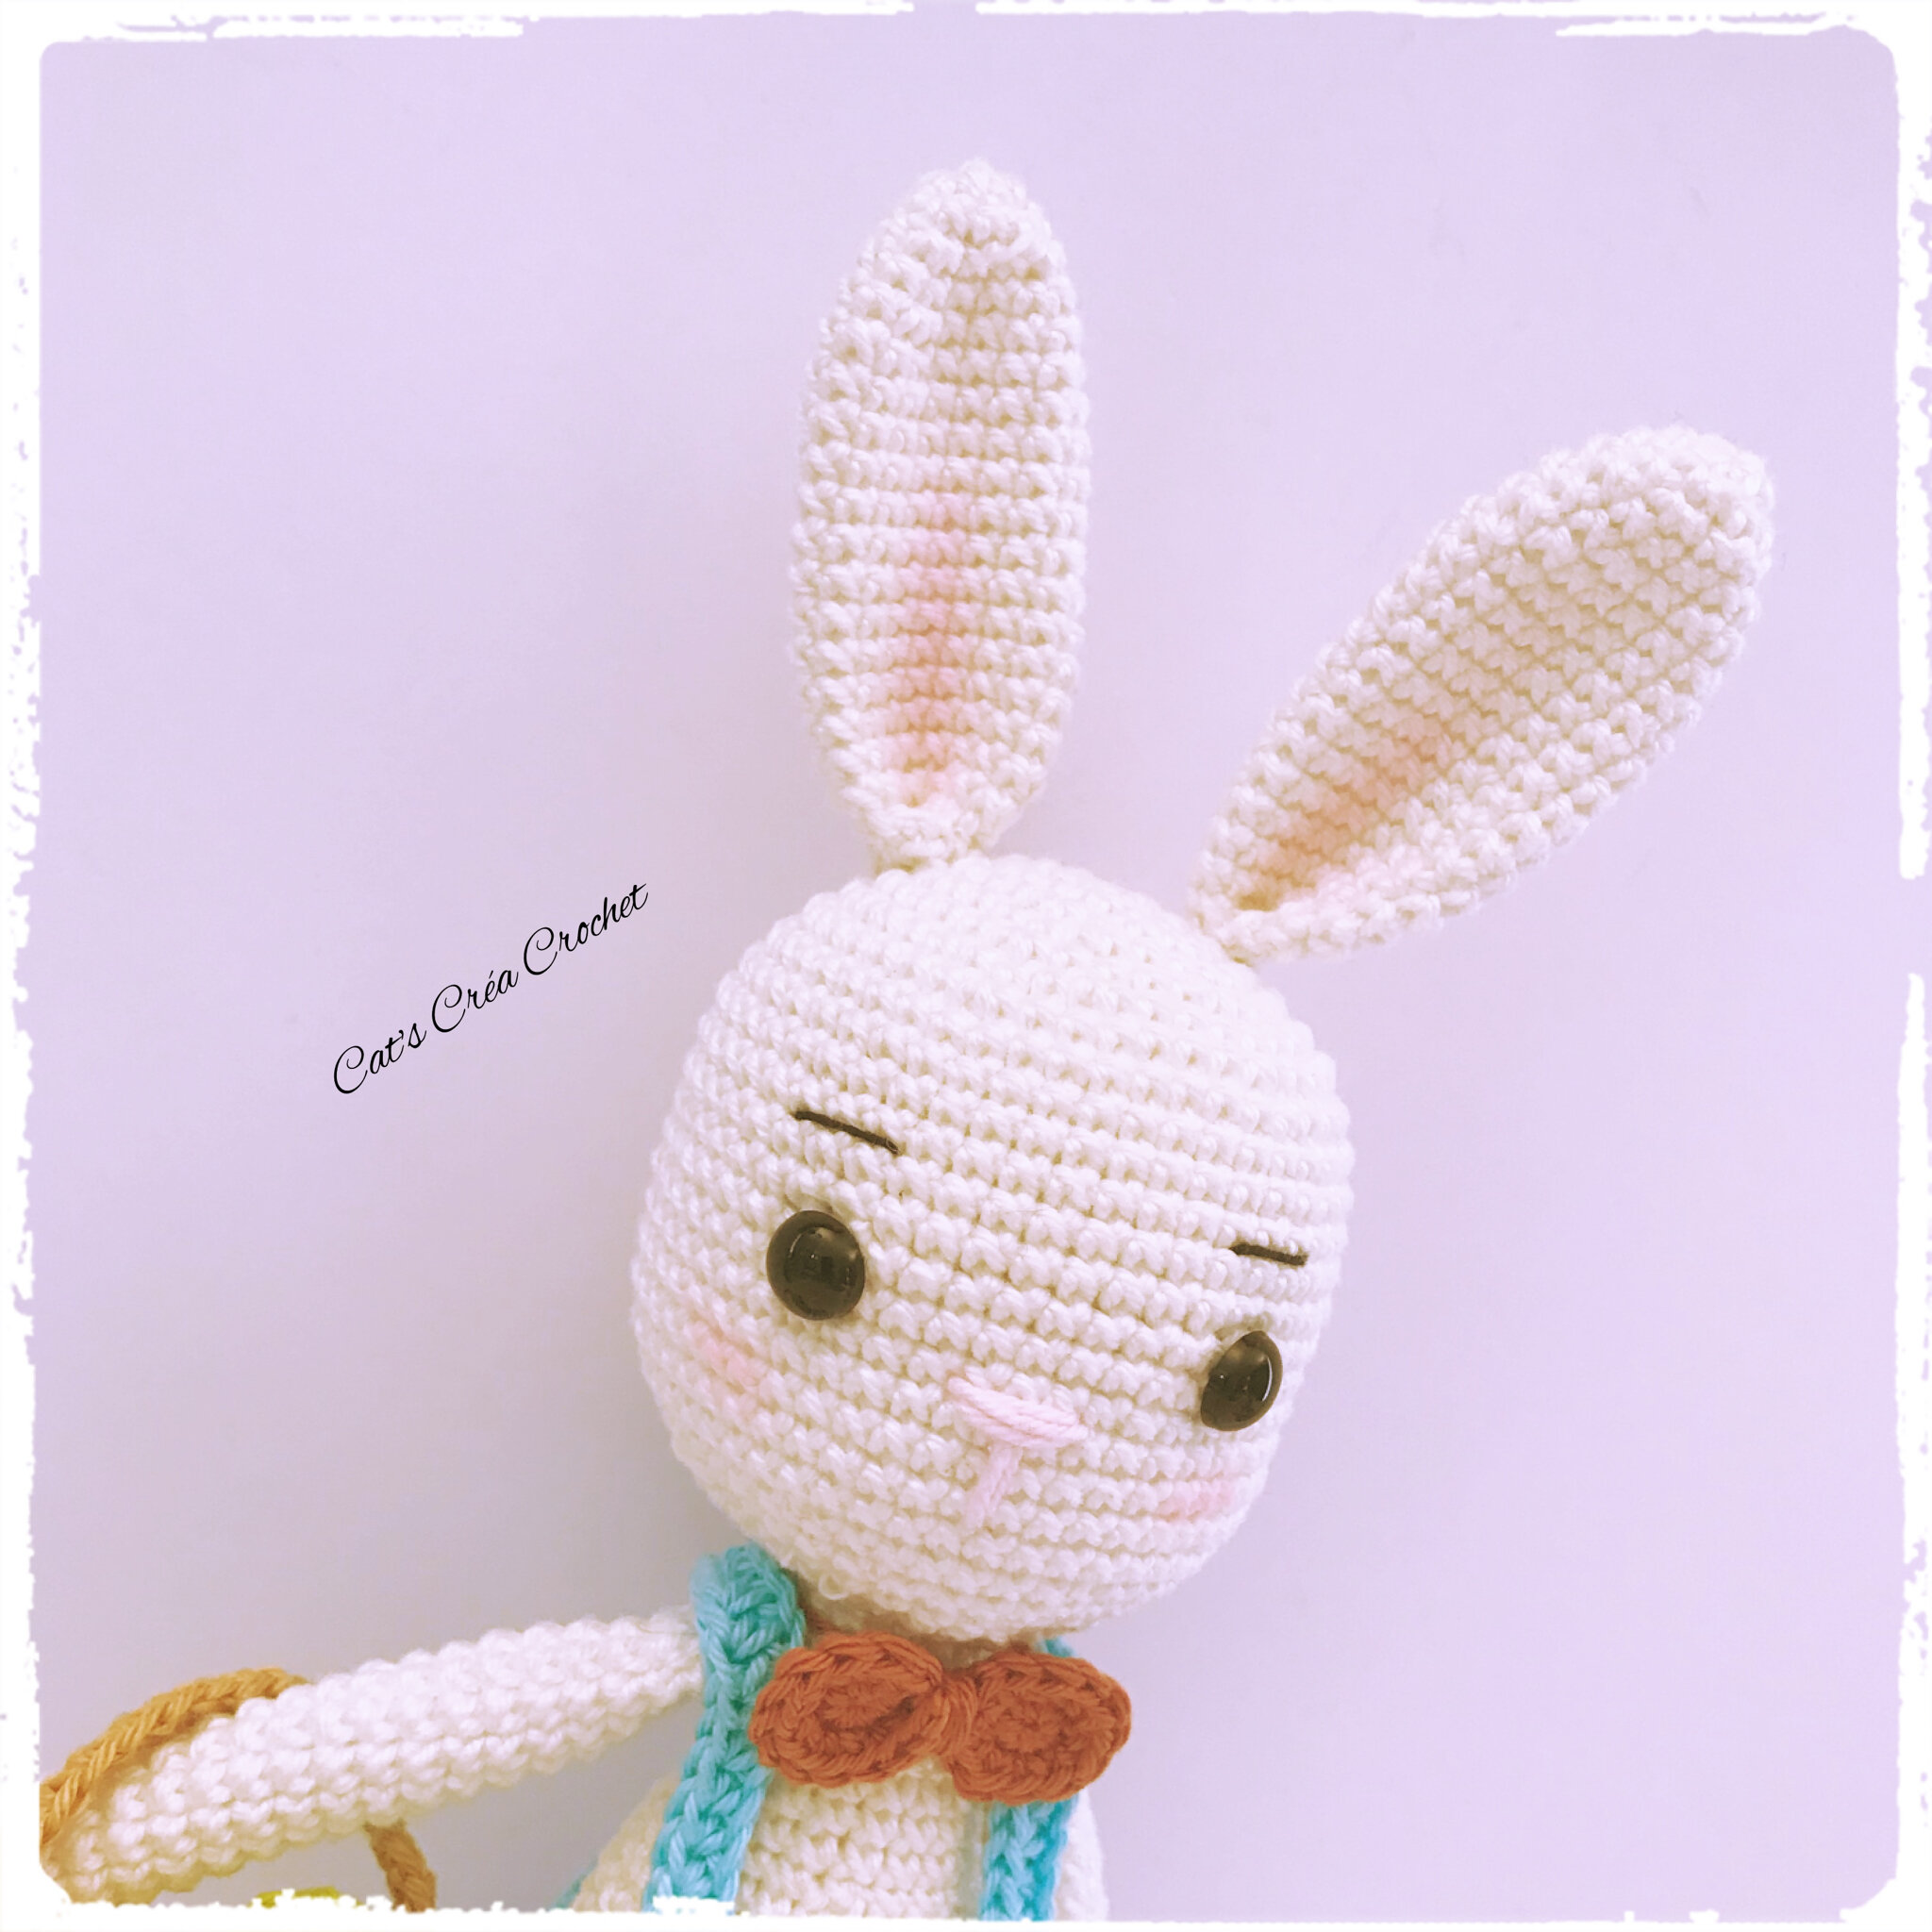 Adorable Amigurumi, lapin avec pantalon salopette au crochet, un